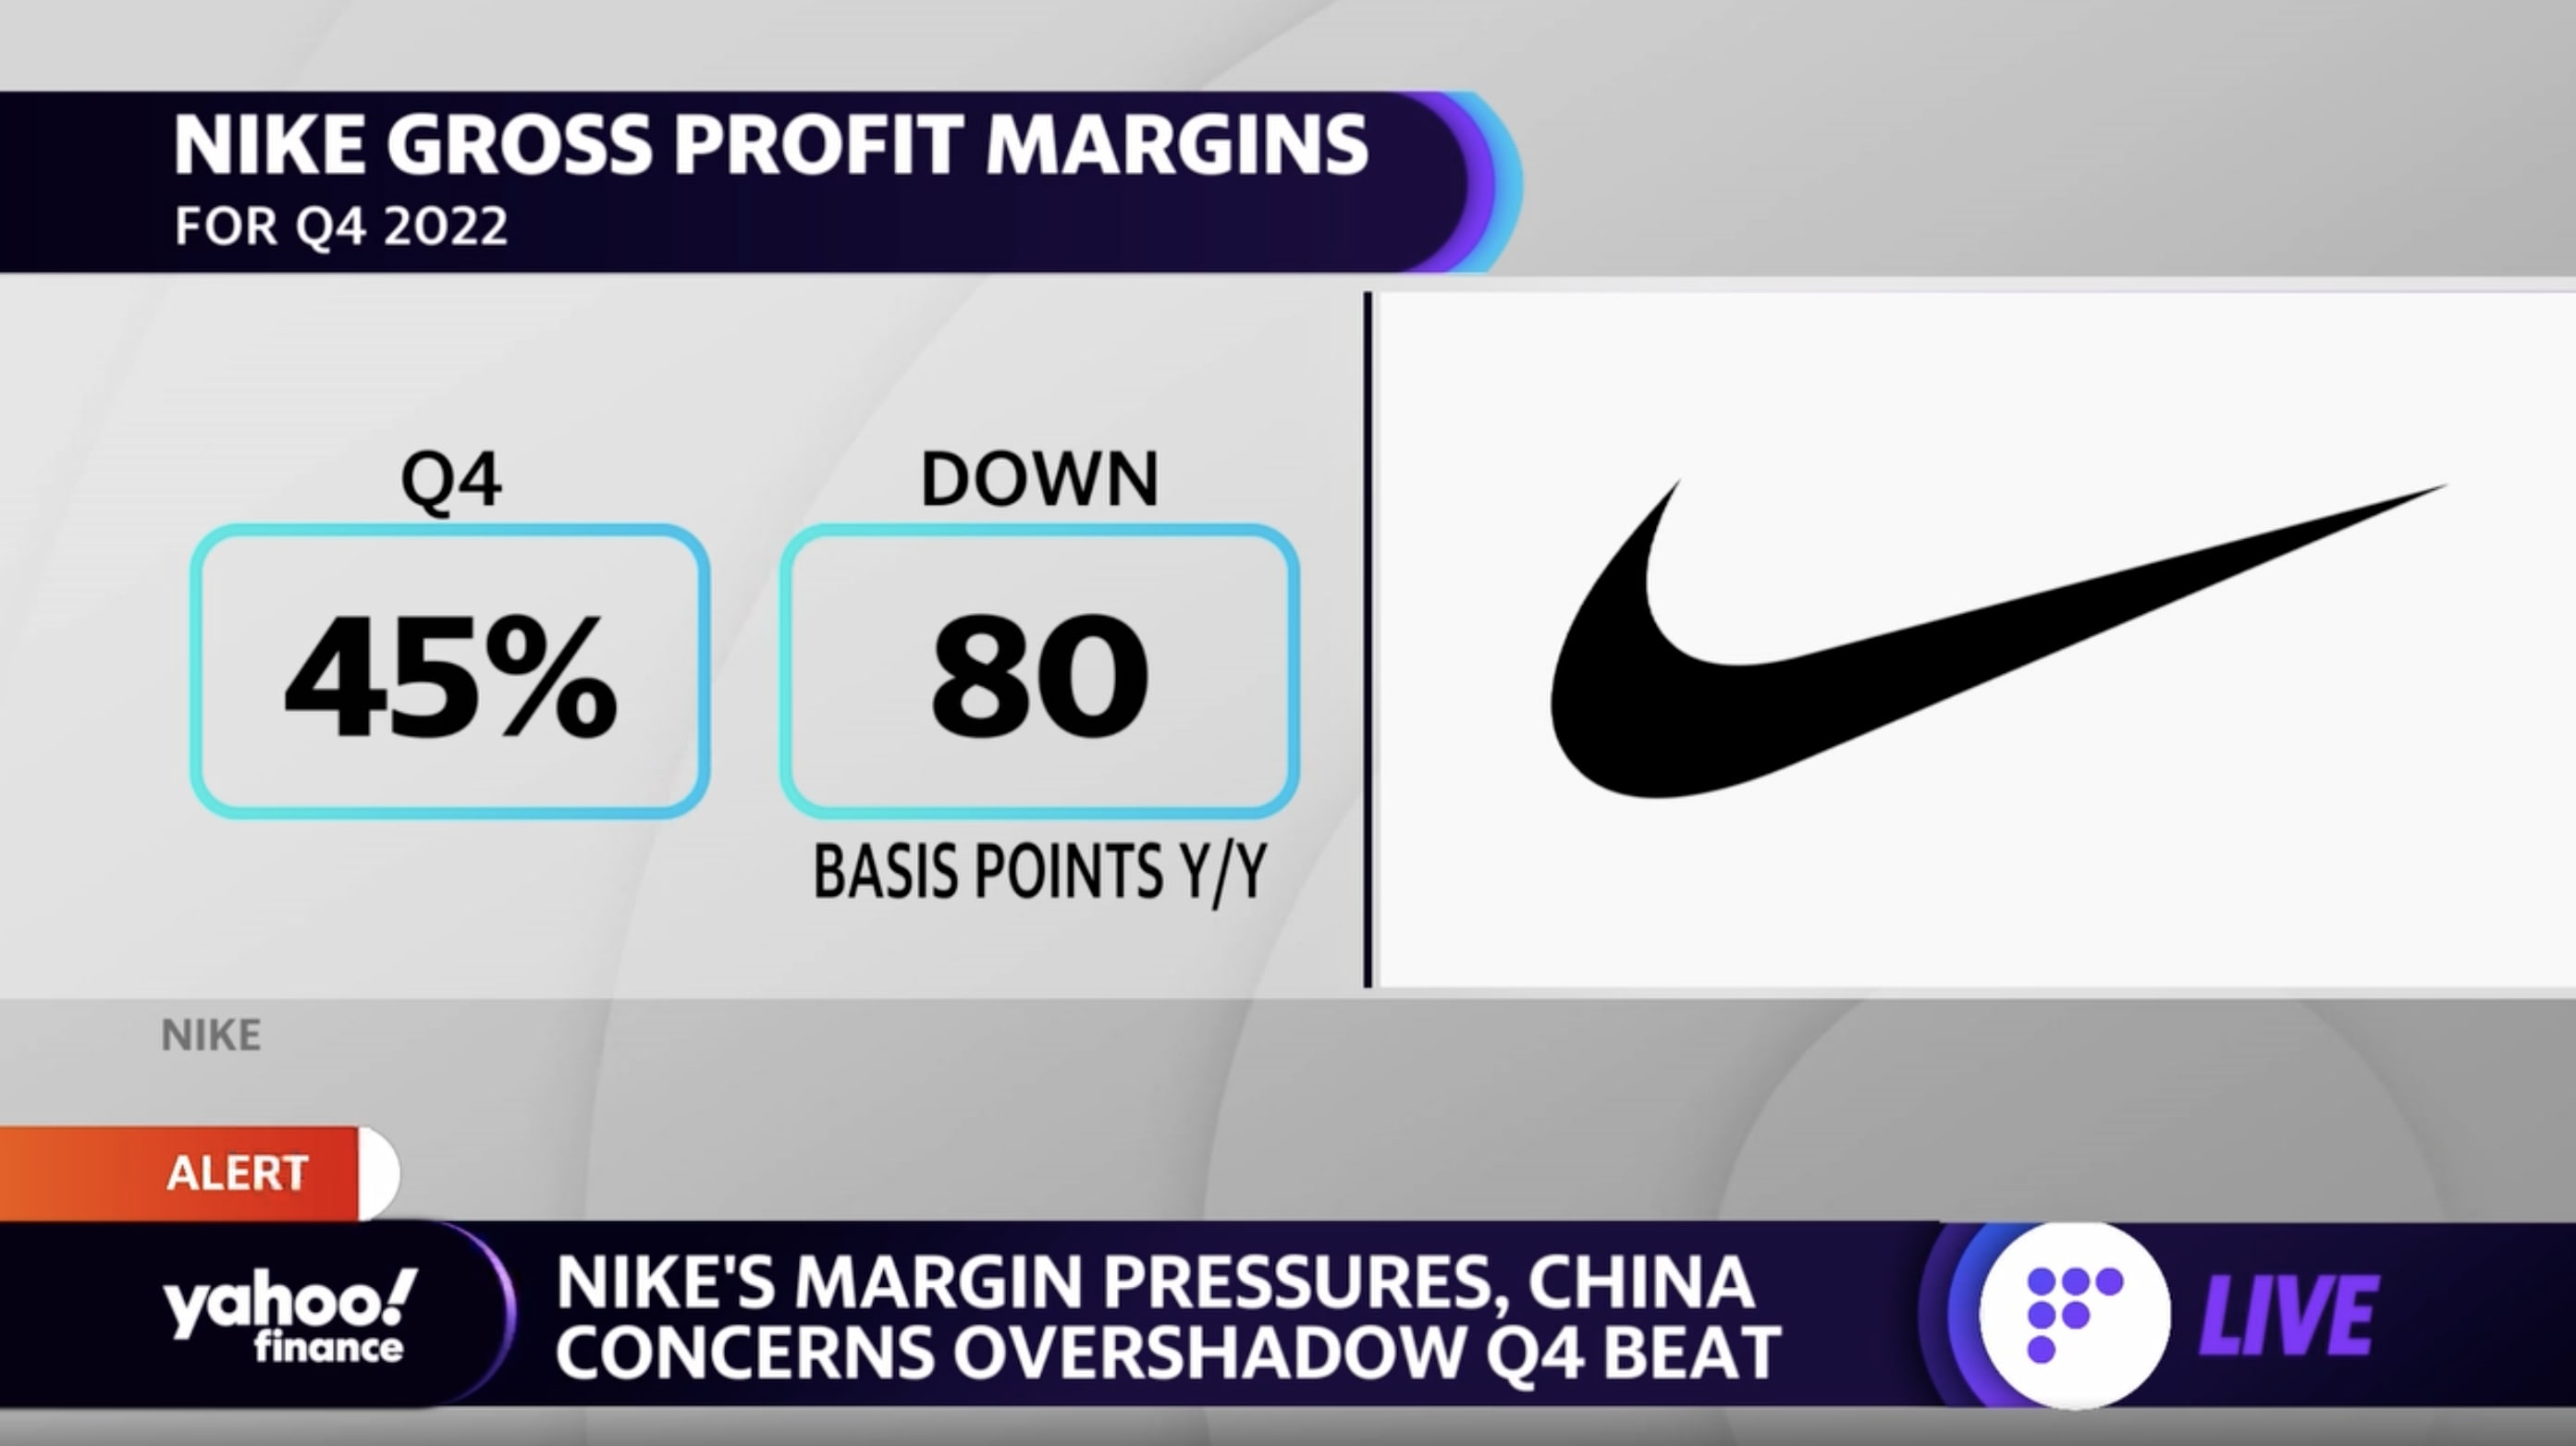 opstelling half acht Dwaal Nike stock slides on downbeat earnings forecast